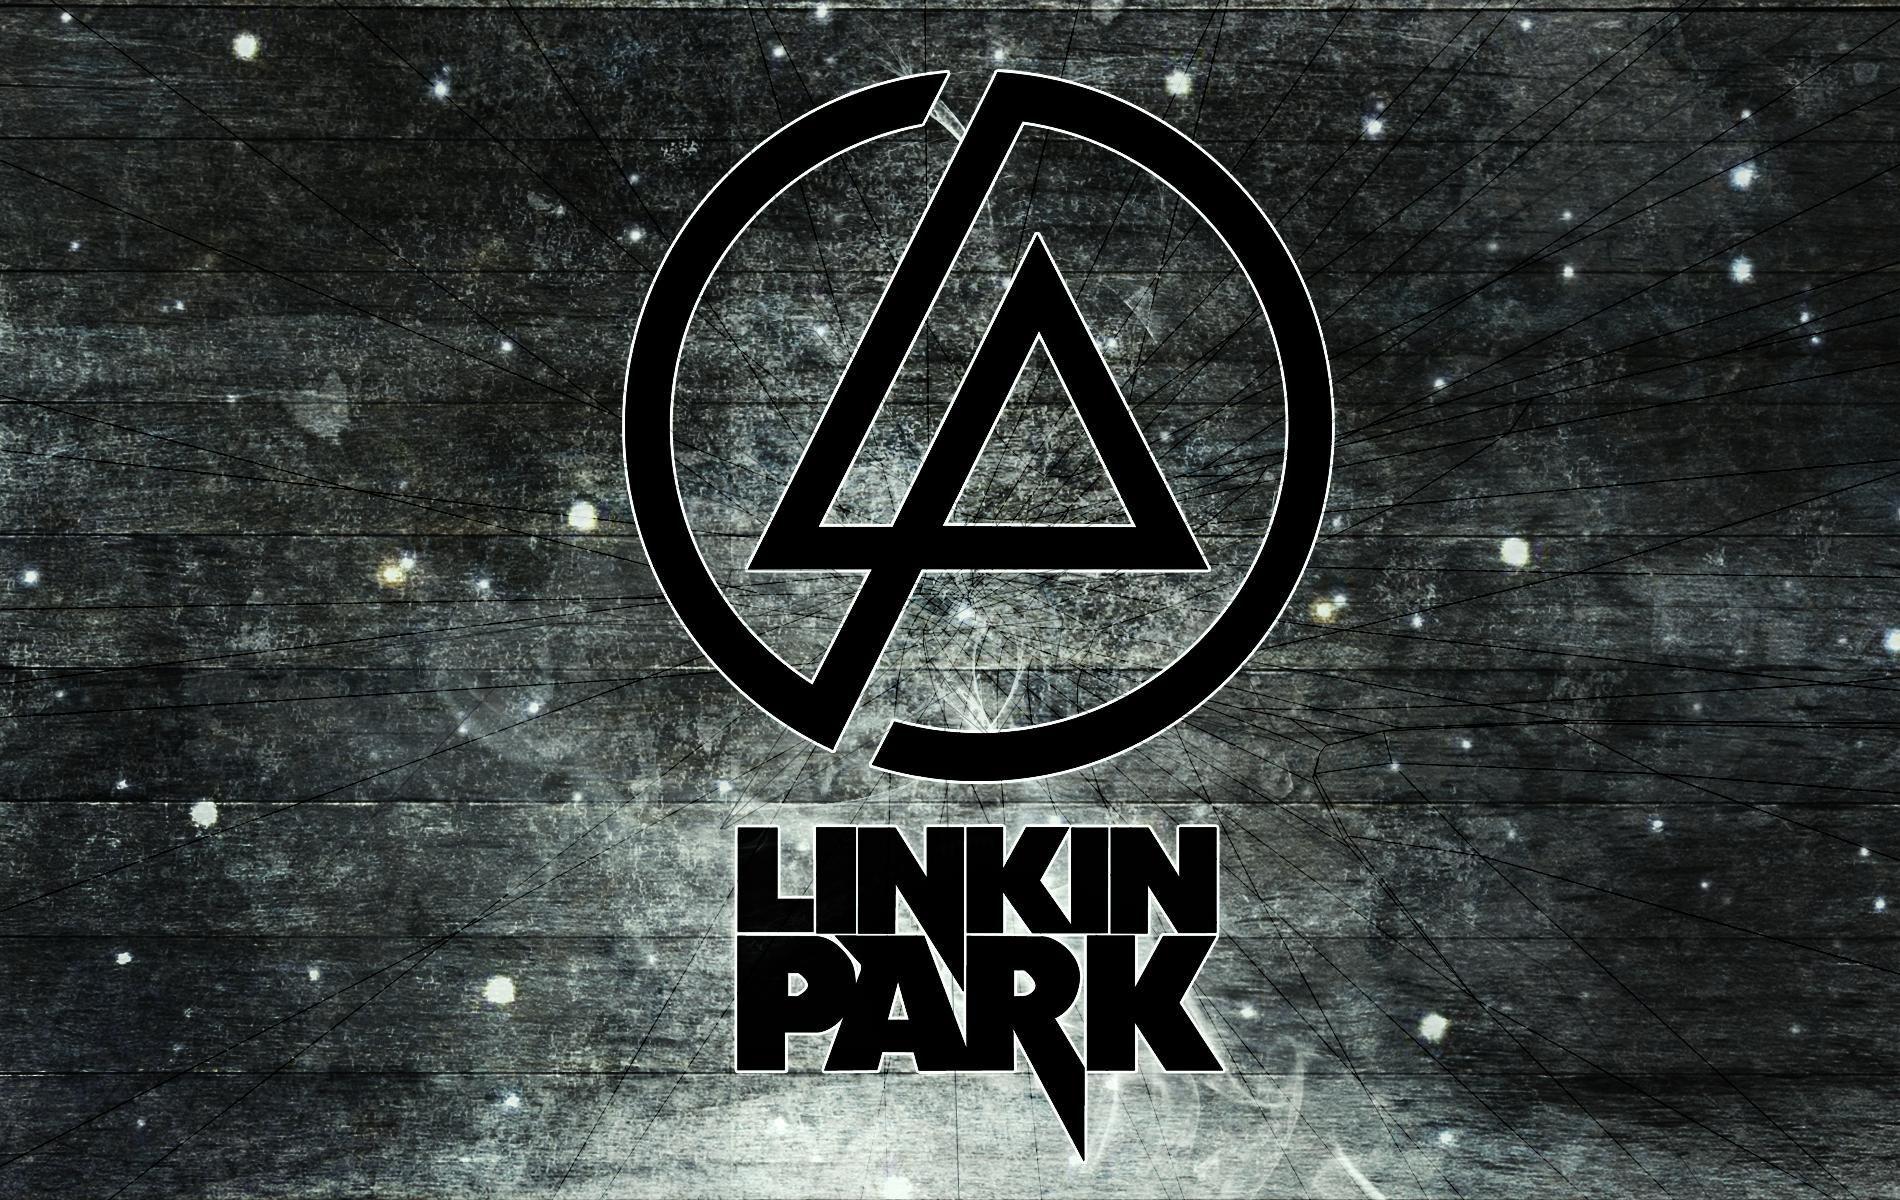 Linkin Park Wallpaper High Quality BozhuWallpaper. Linkin Park